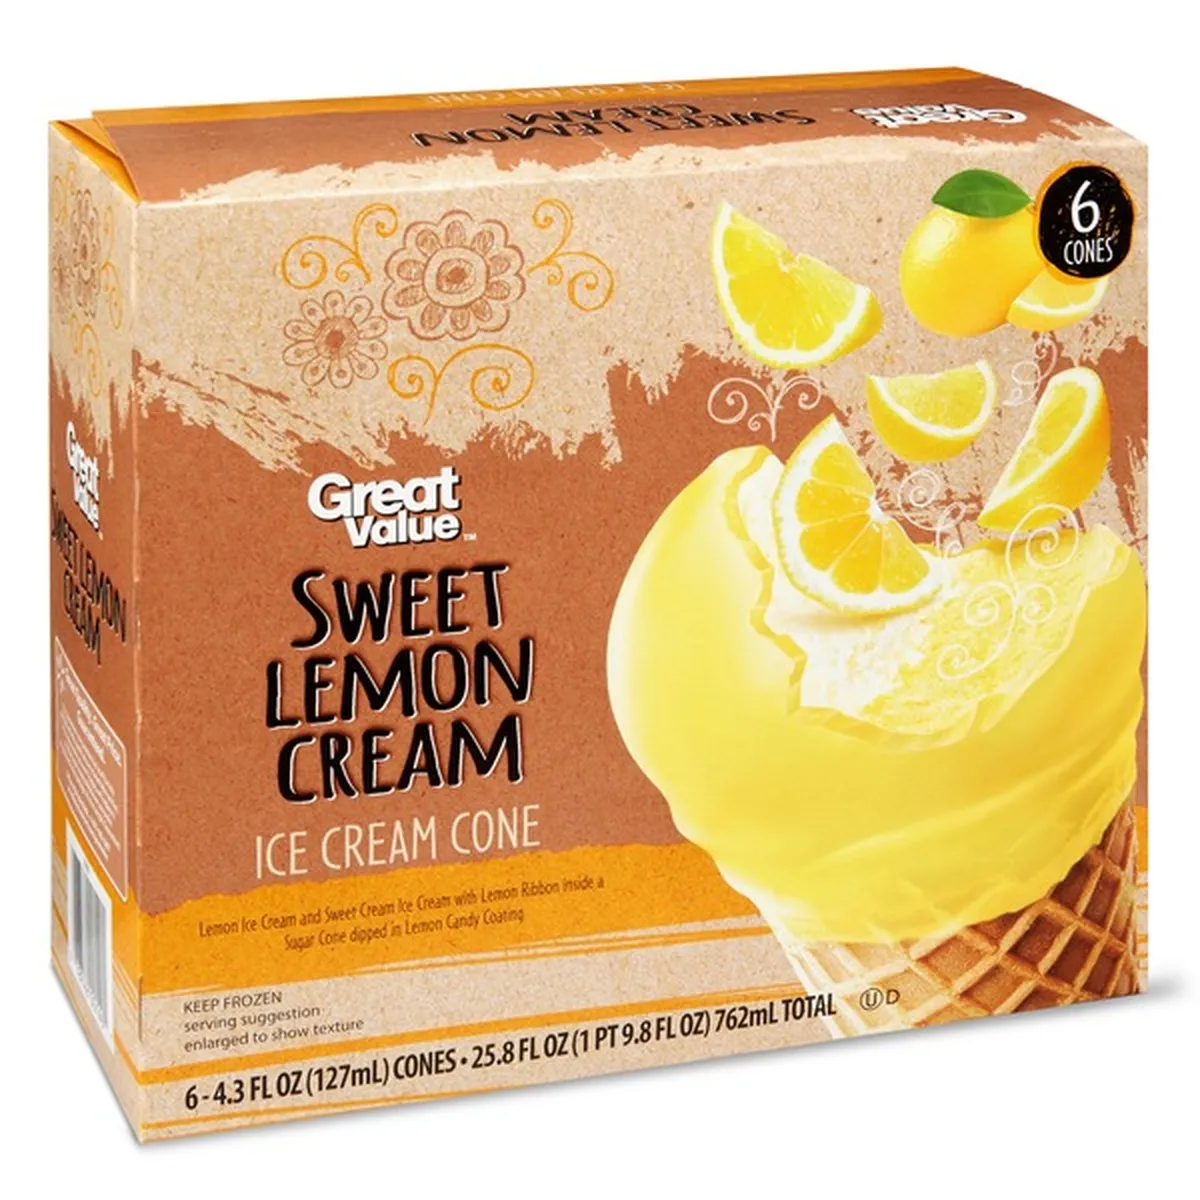 Great Value Sweet Lemon Cream Ice Creams With Lemon Ribbon In A 